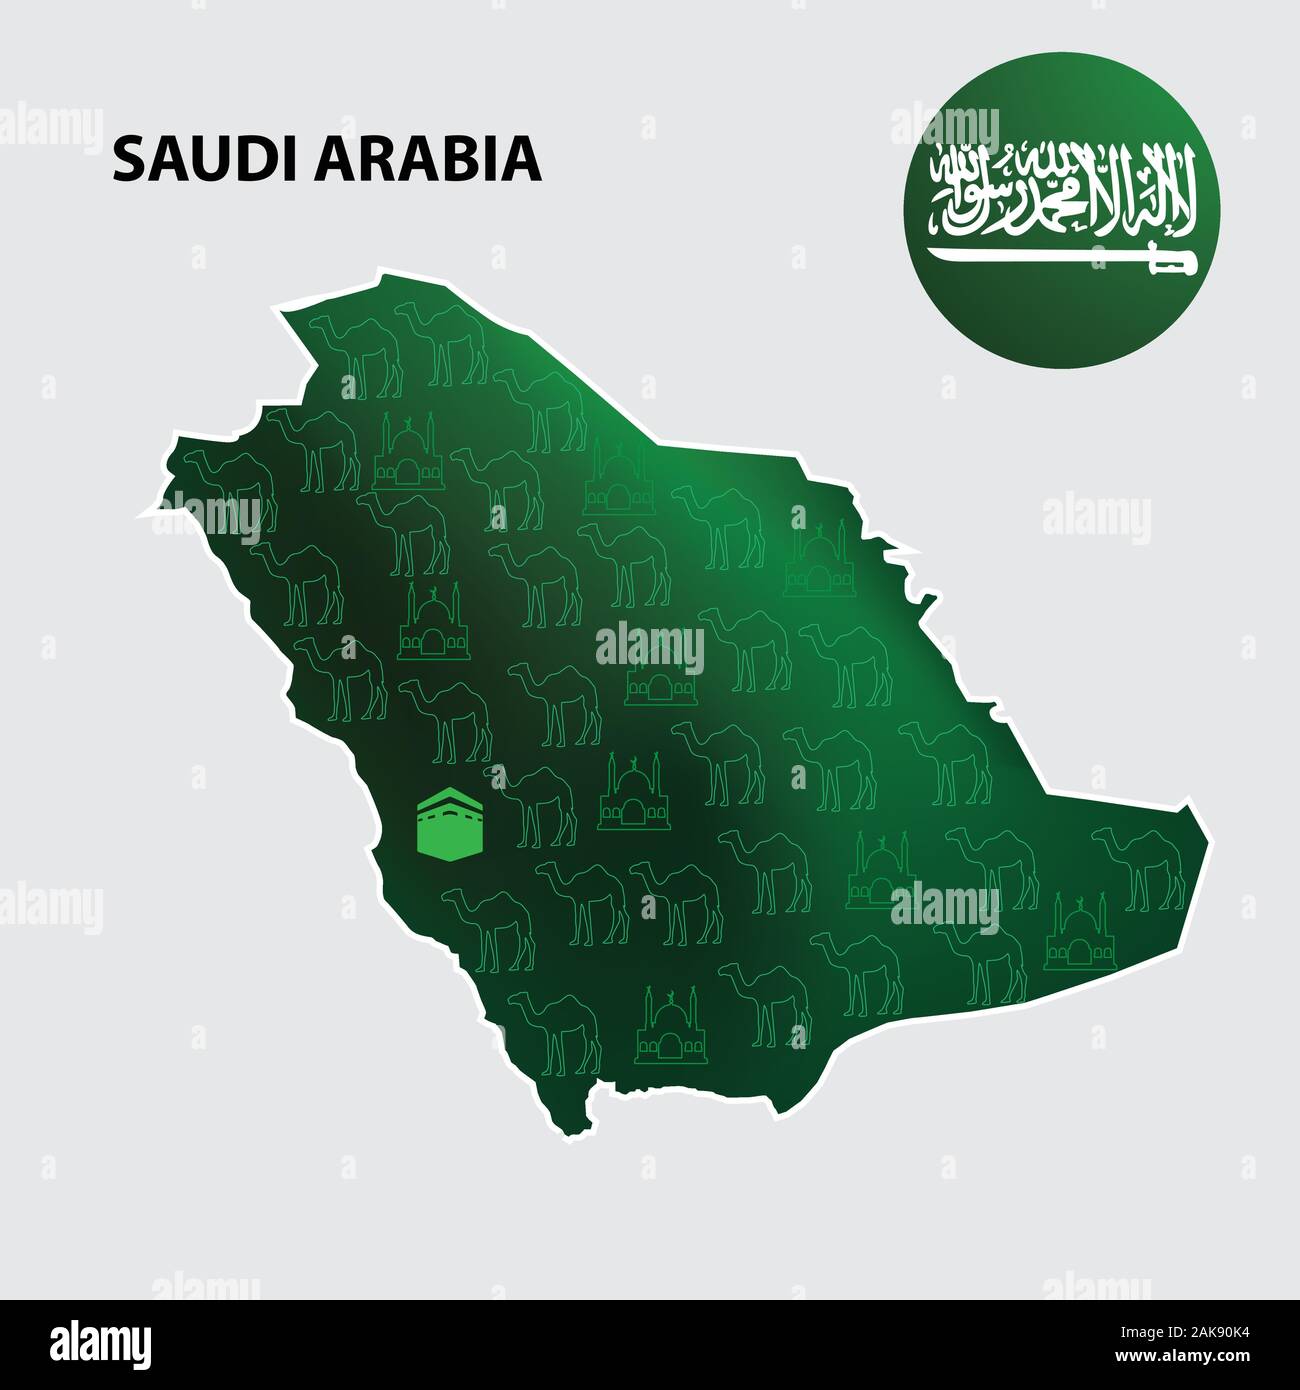 Saudi Arabia. map of Saudi Arabia with flag on Gry background. Stock Vector